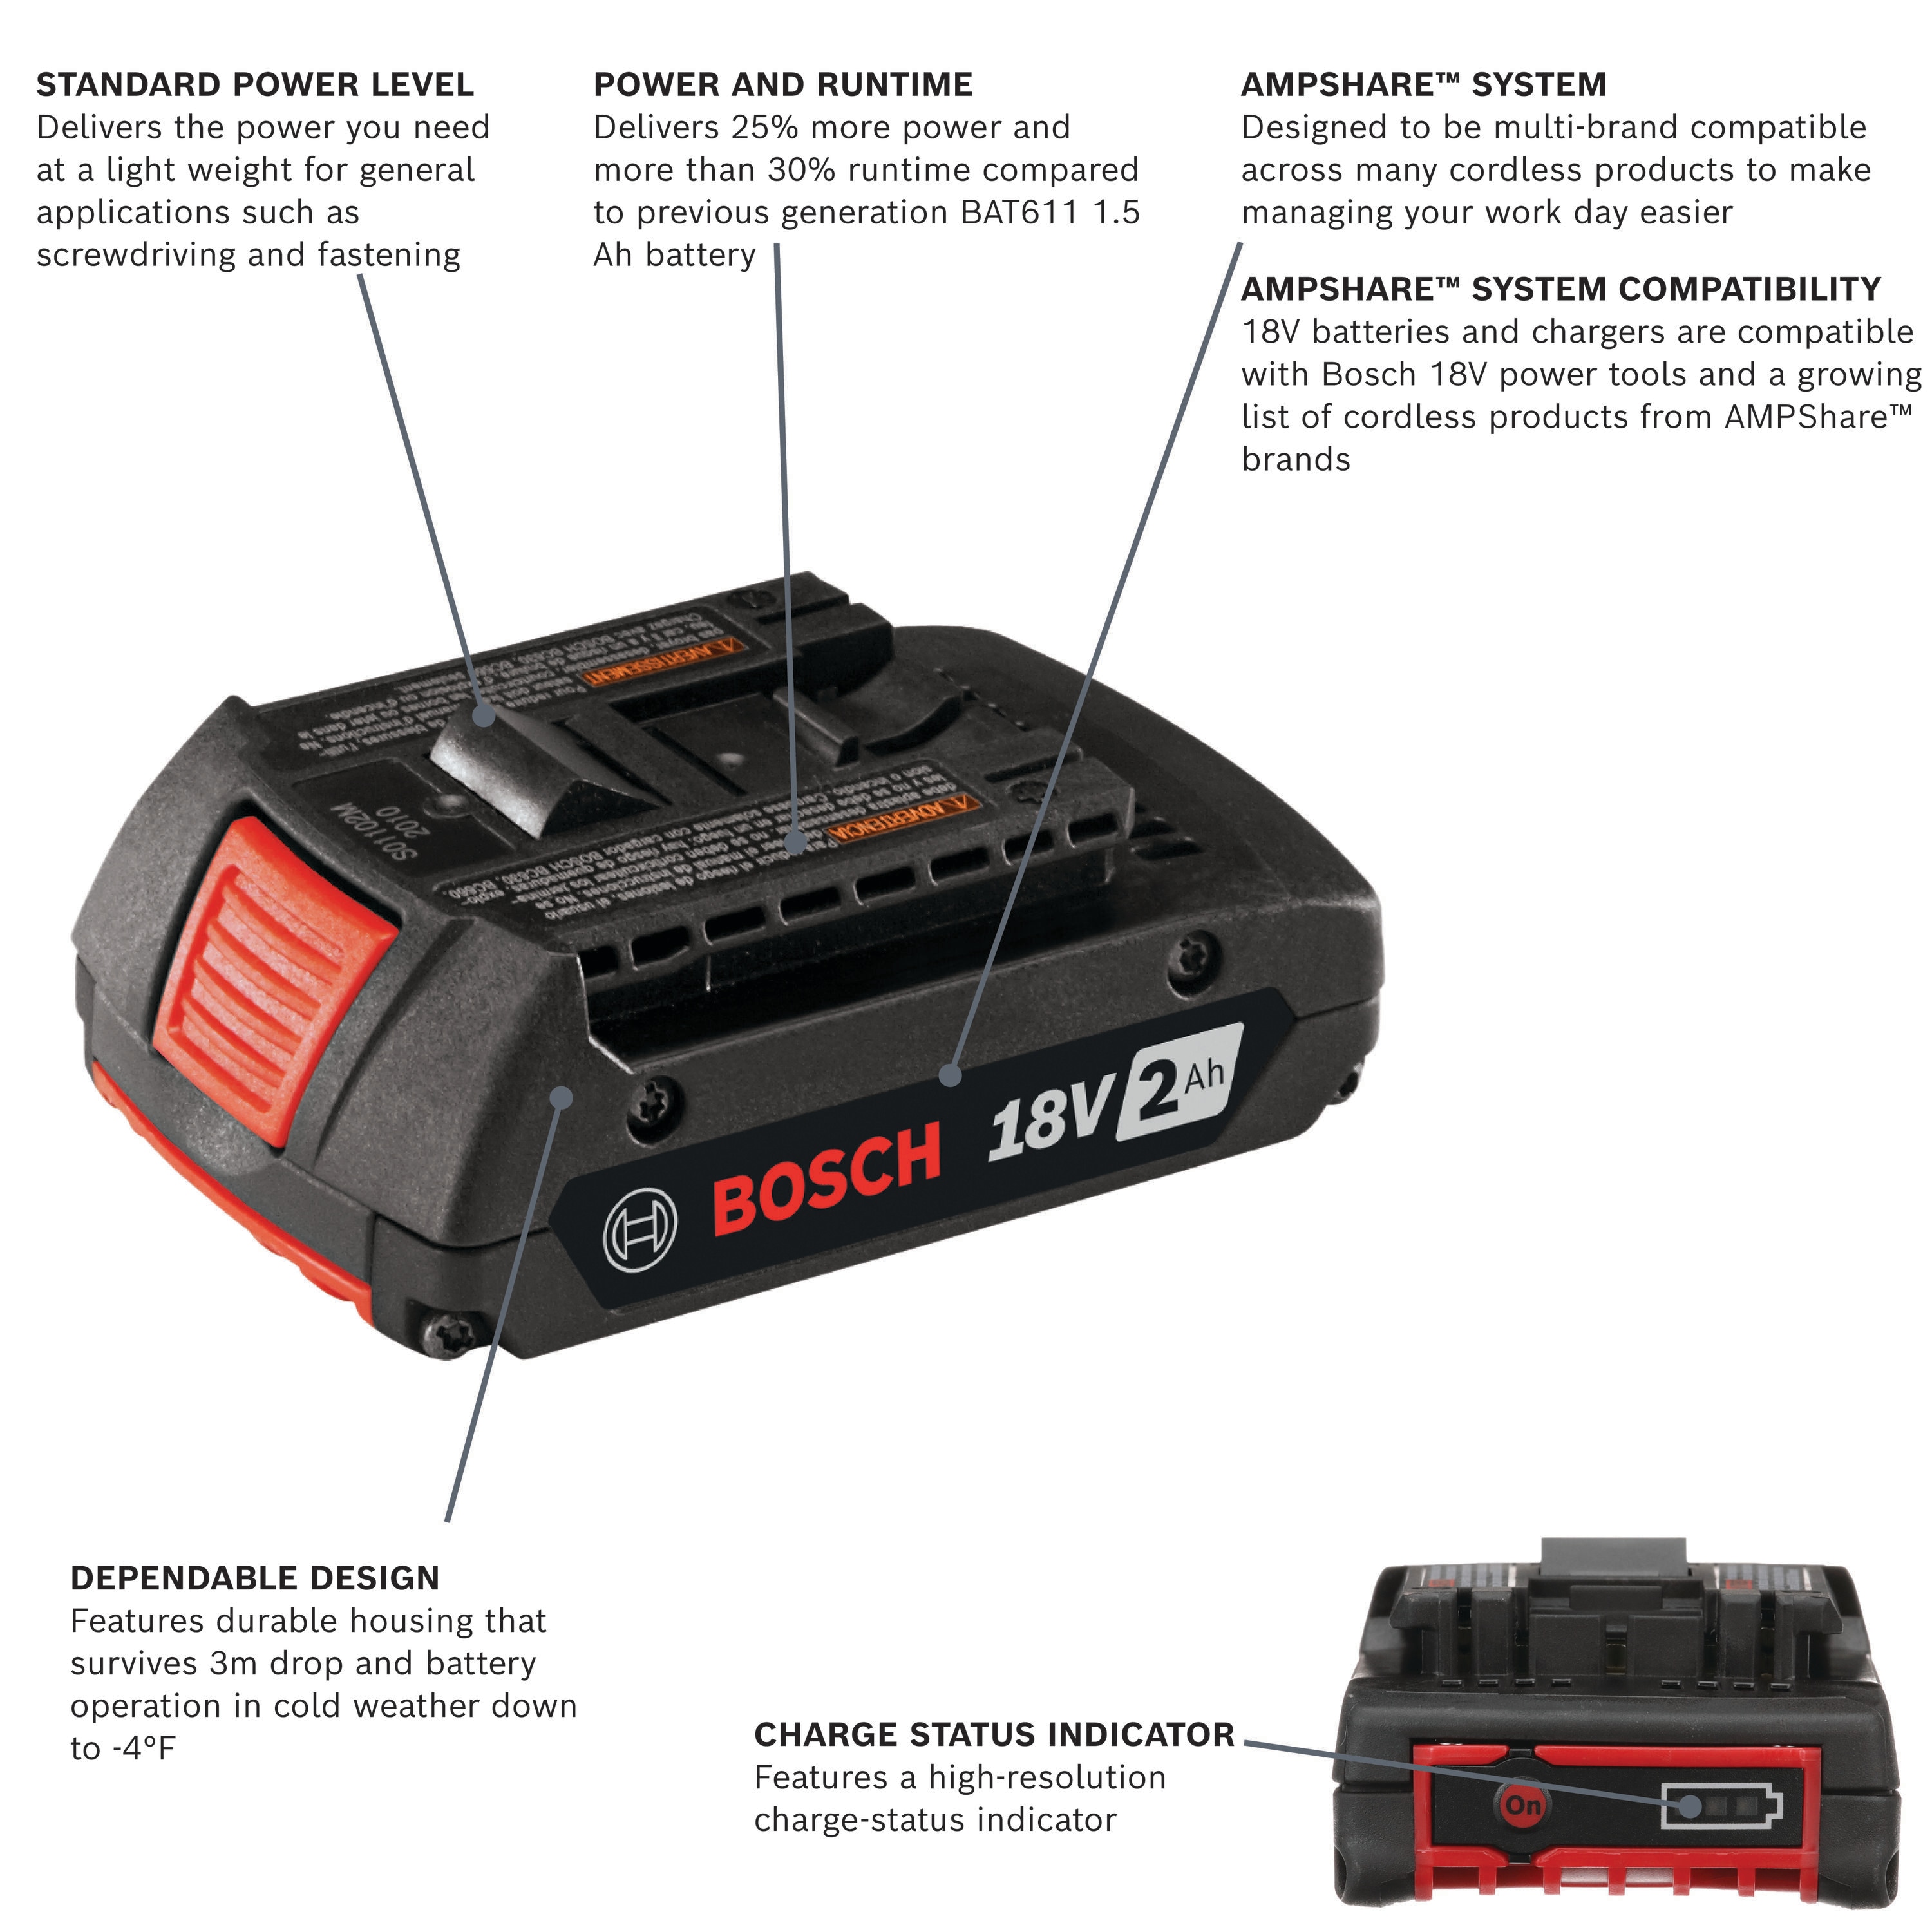 Bosch 18V 1.5 Li-ion Battery